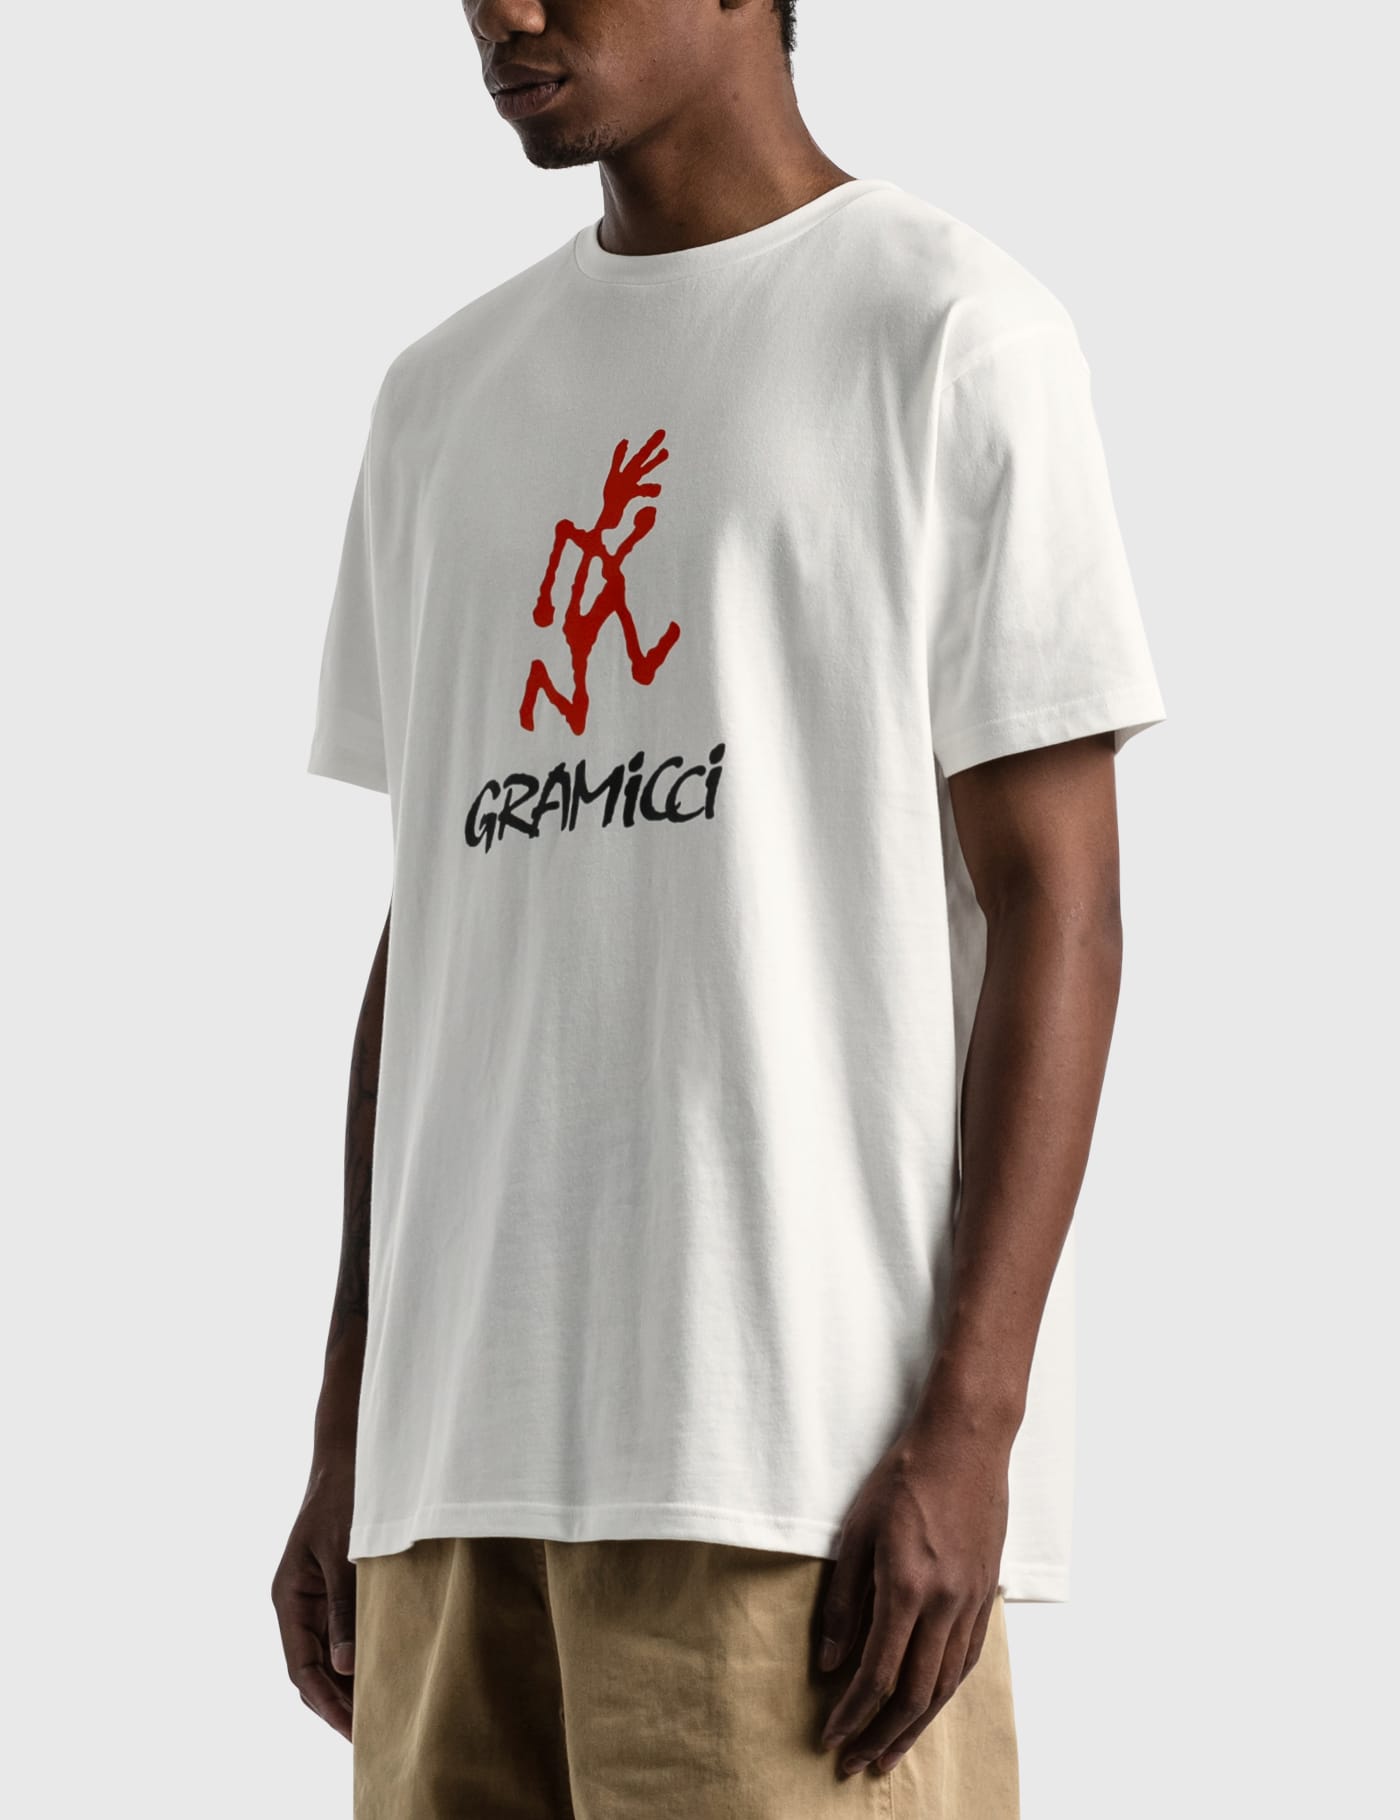 Gramicci - Gramicci Logo T-shirt | HBX - Globally Curated Fashion